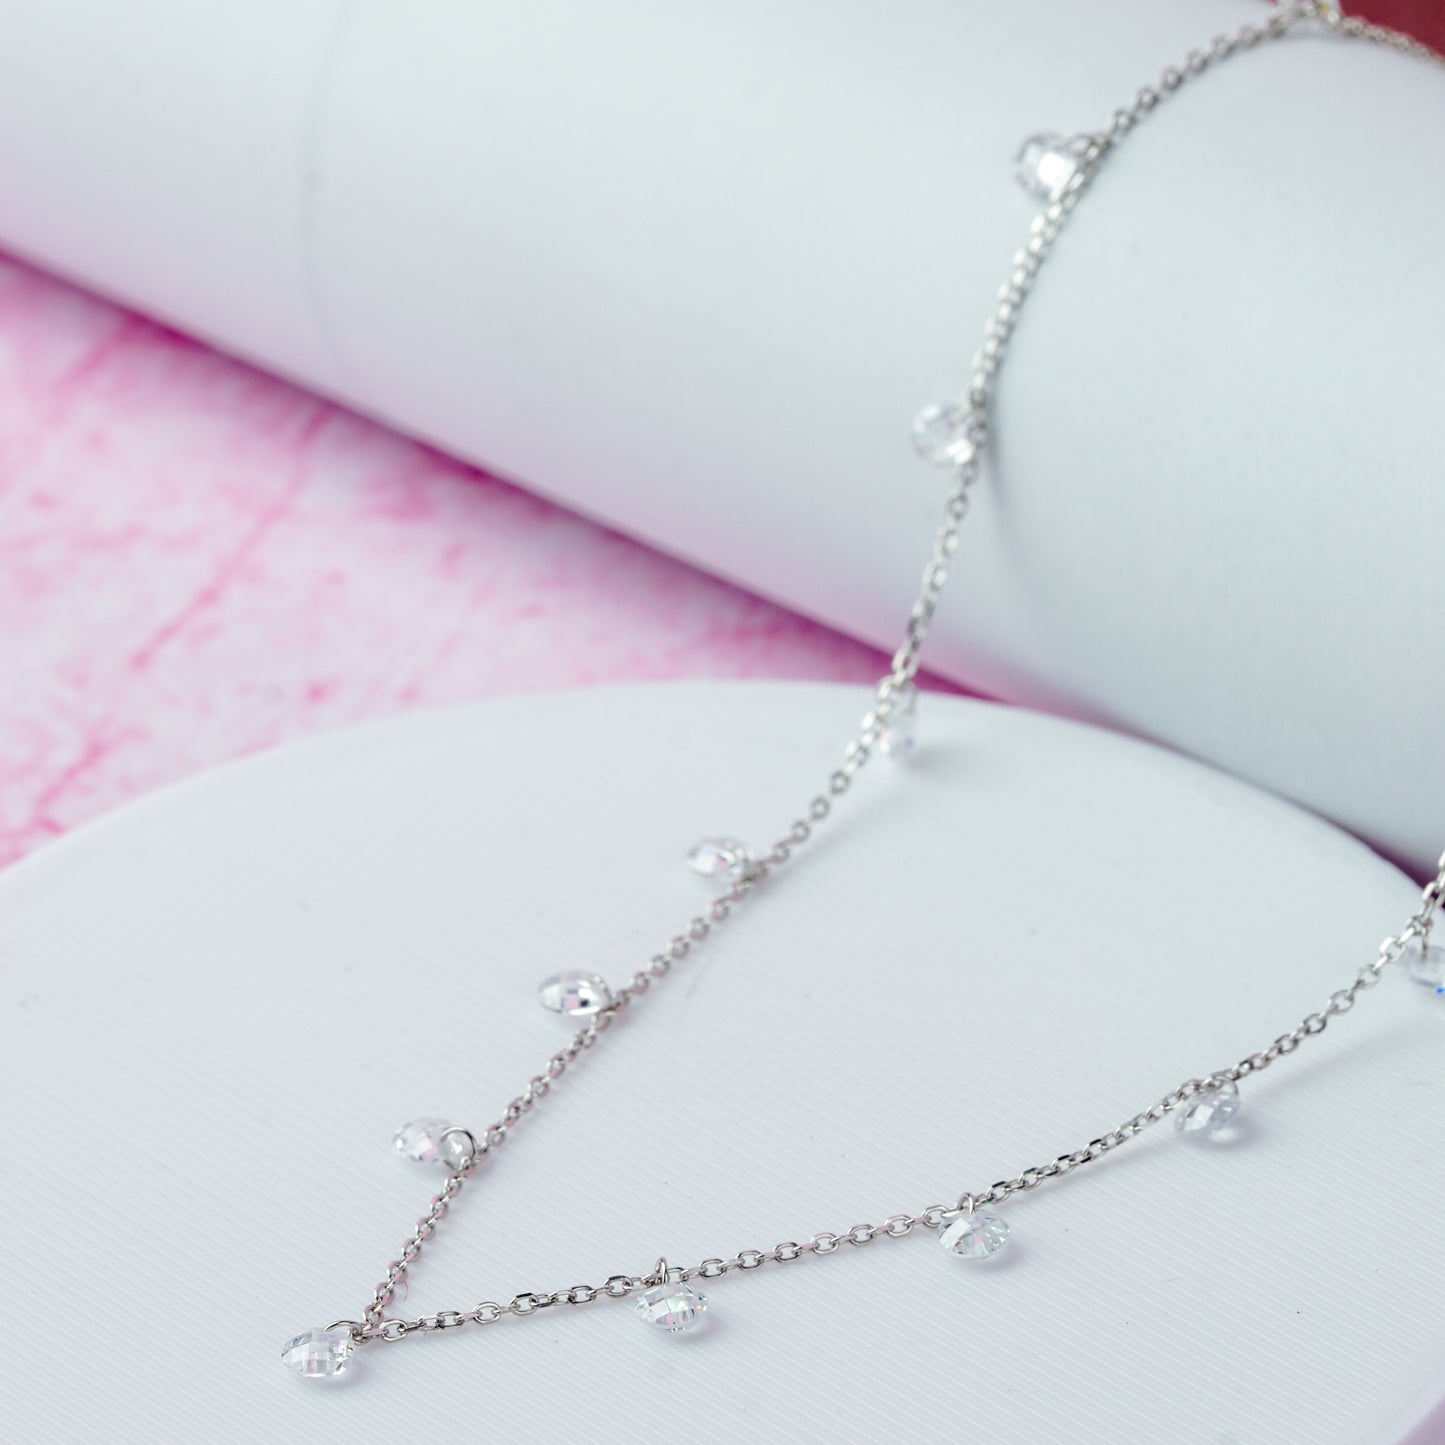 Silver White Stone Queen's Necklace Chain